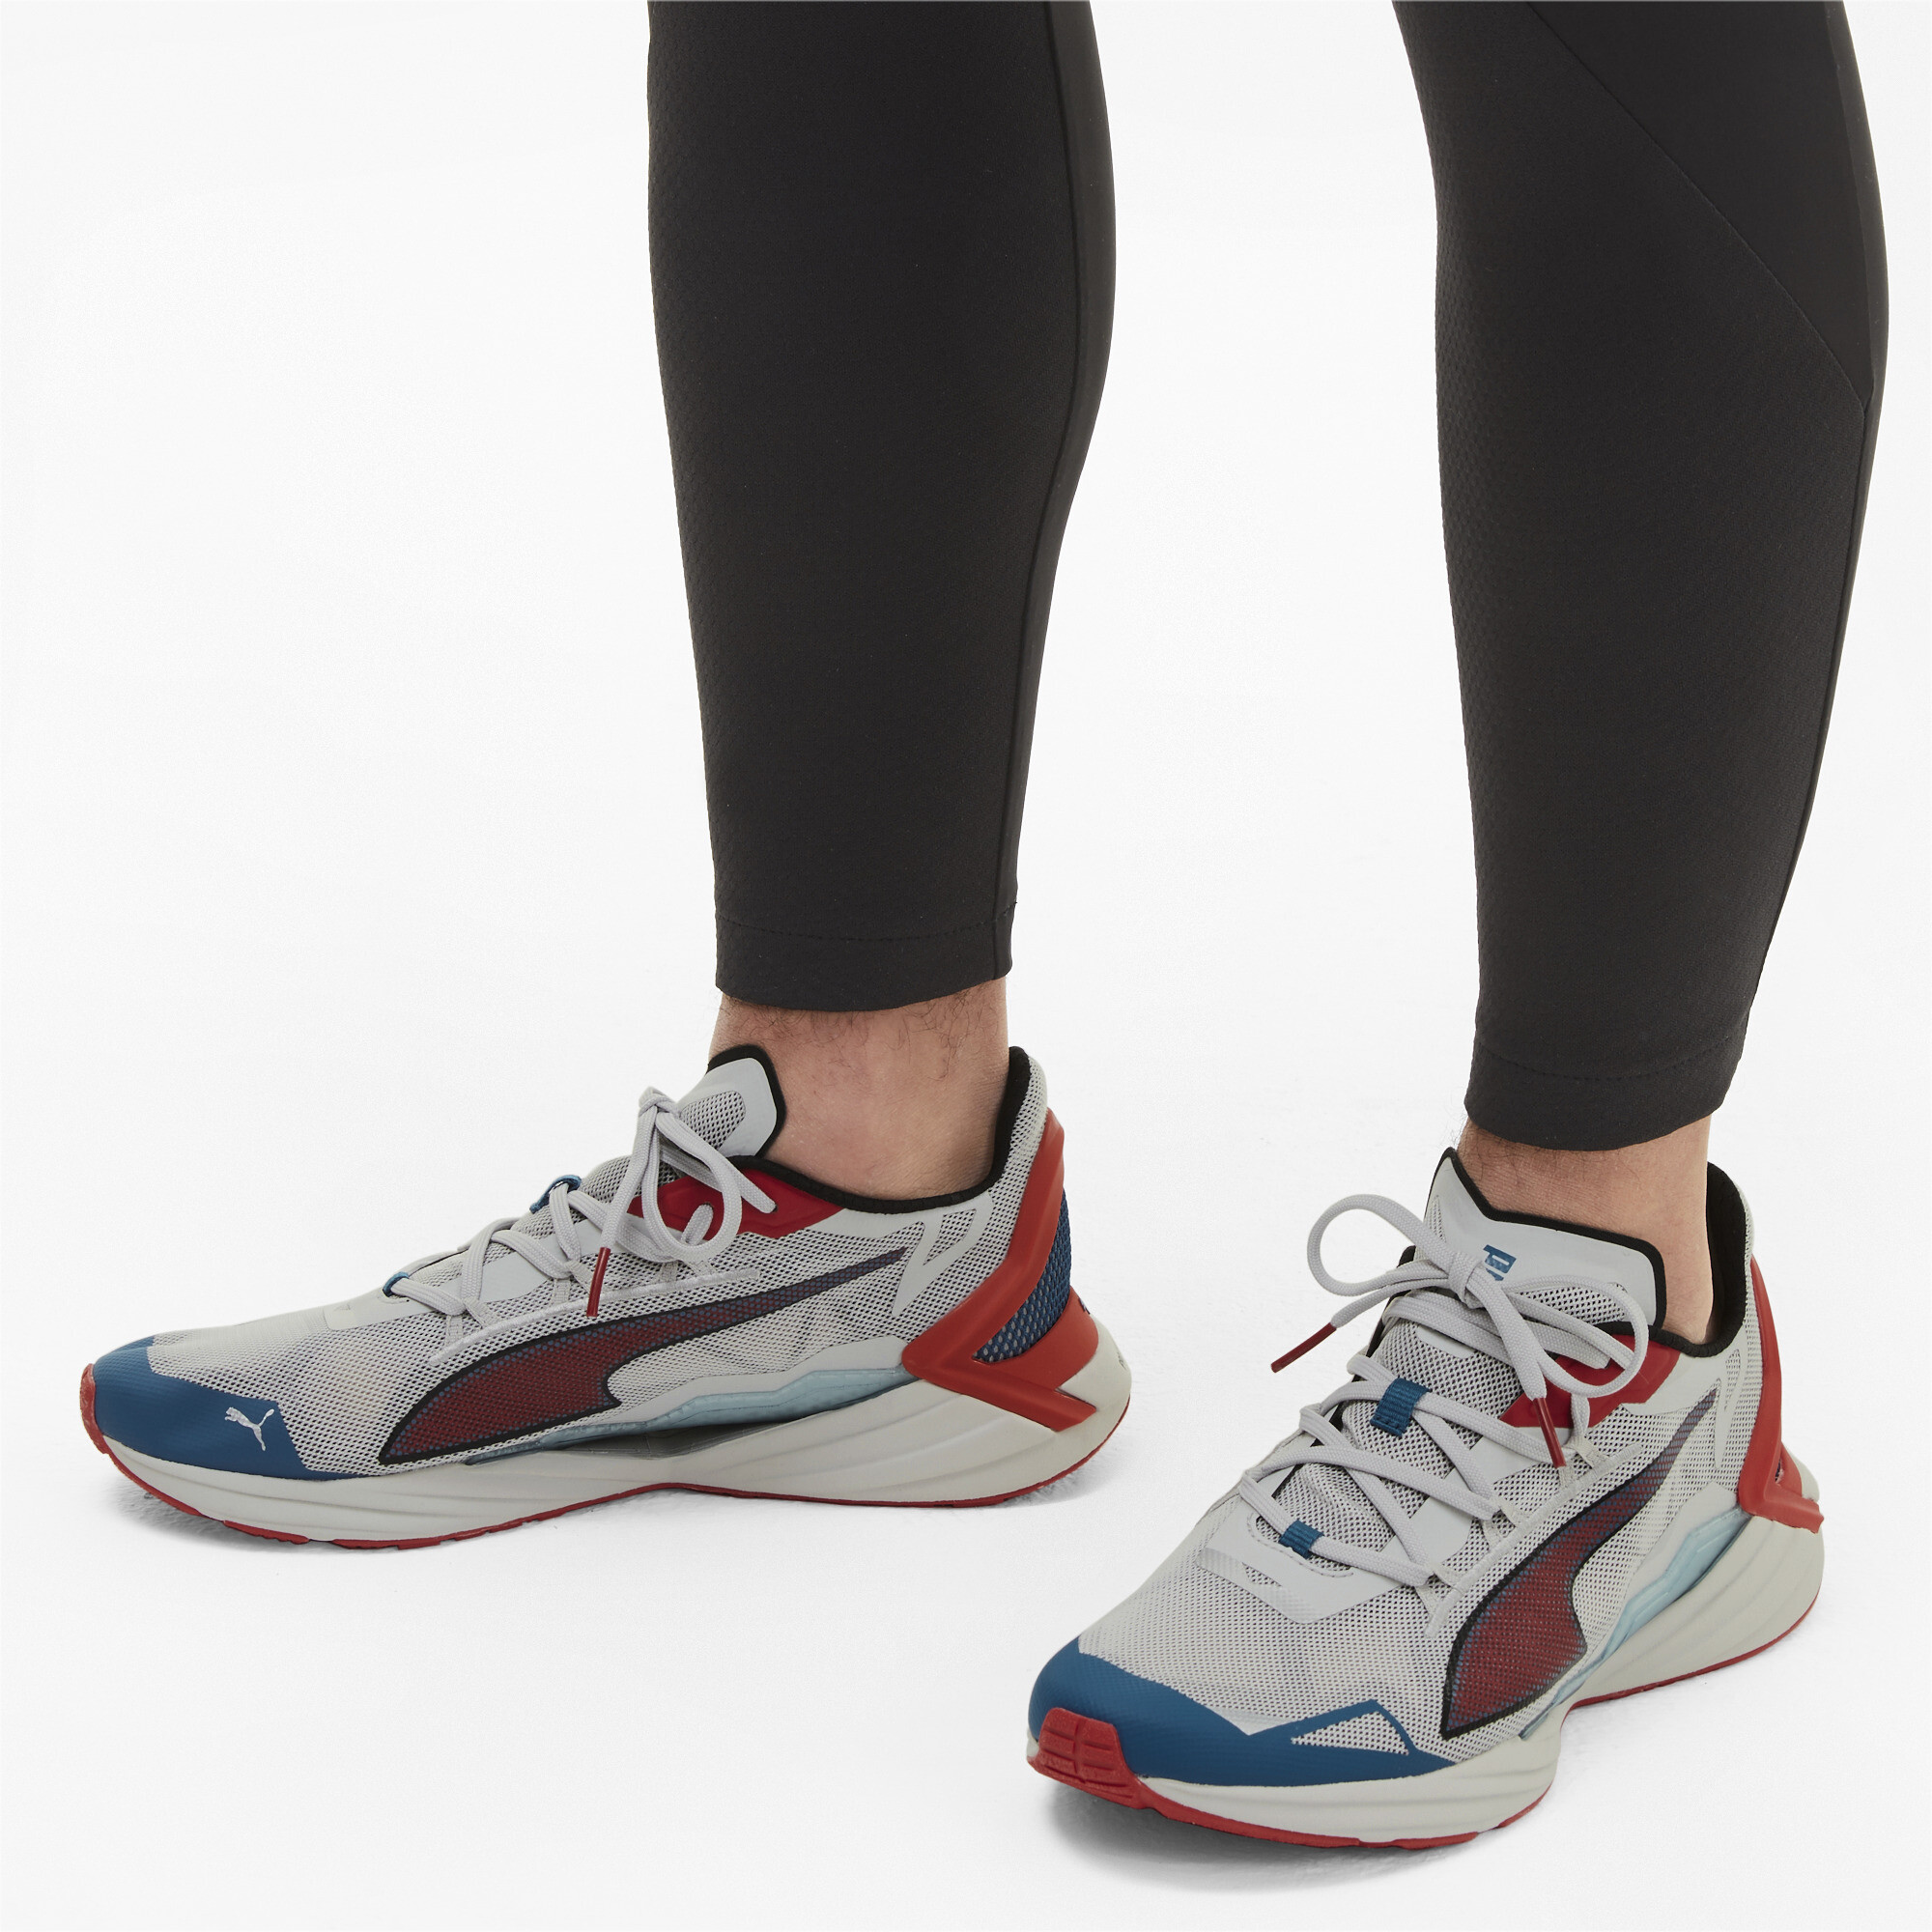 PUMA Men's UltraRide Running Shoes | eBay